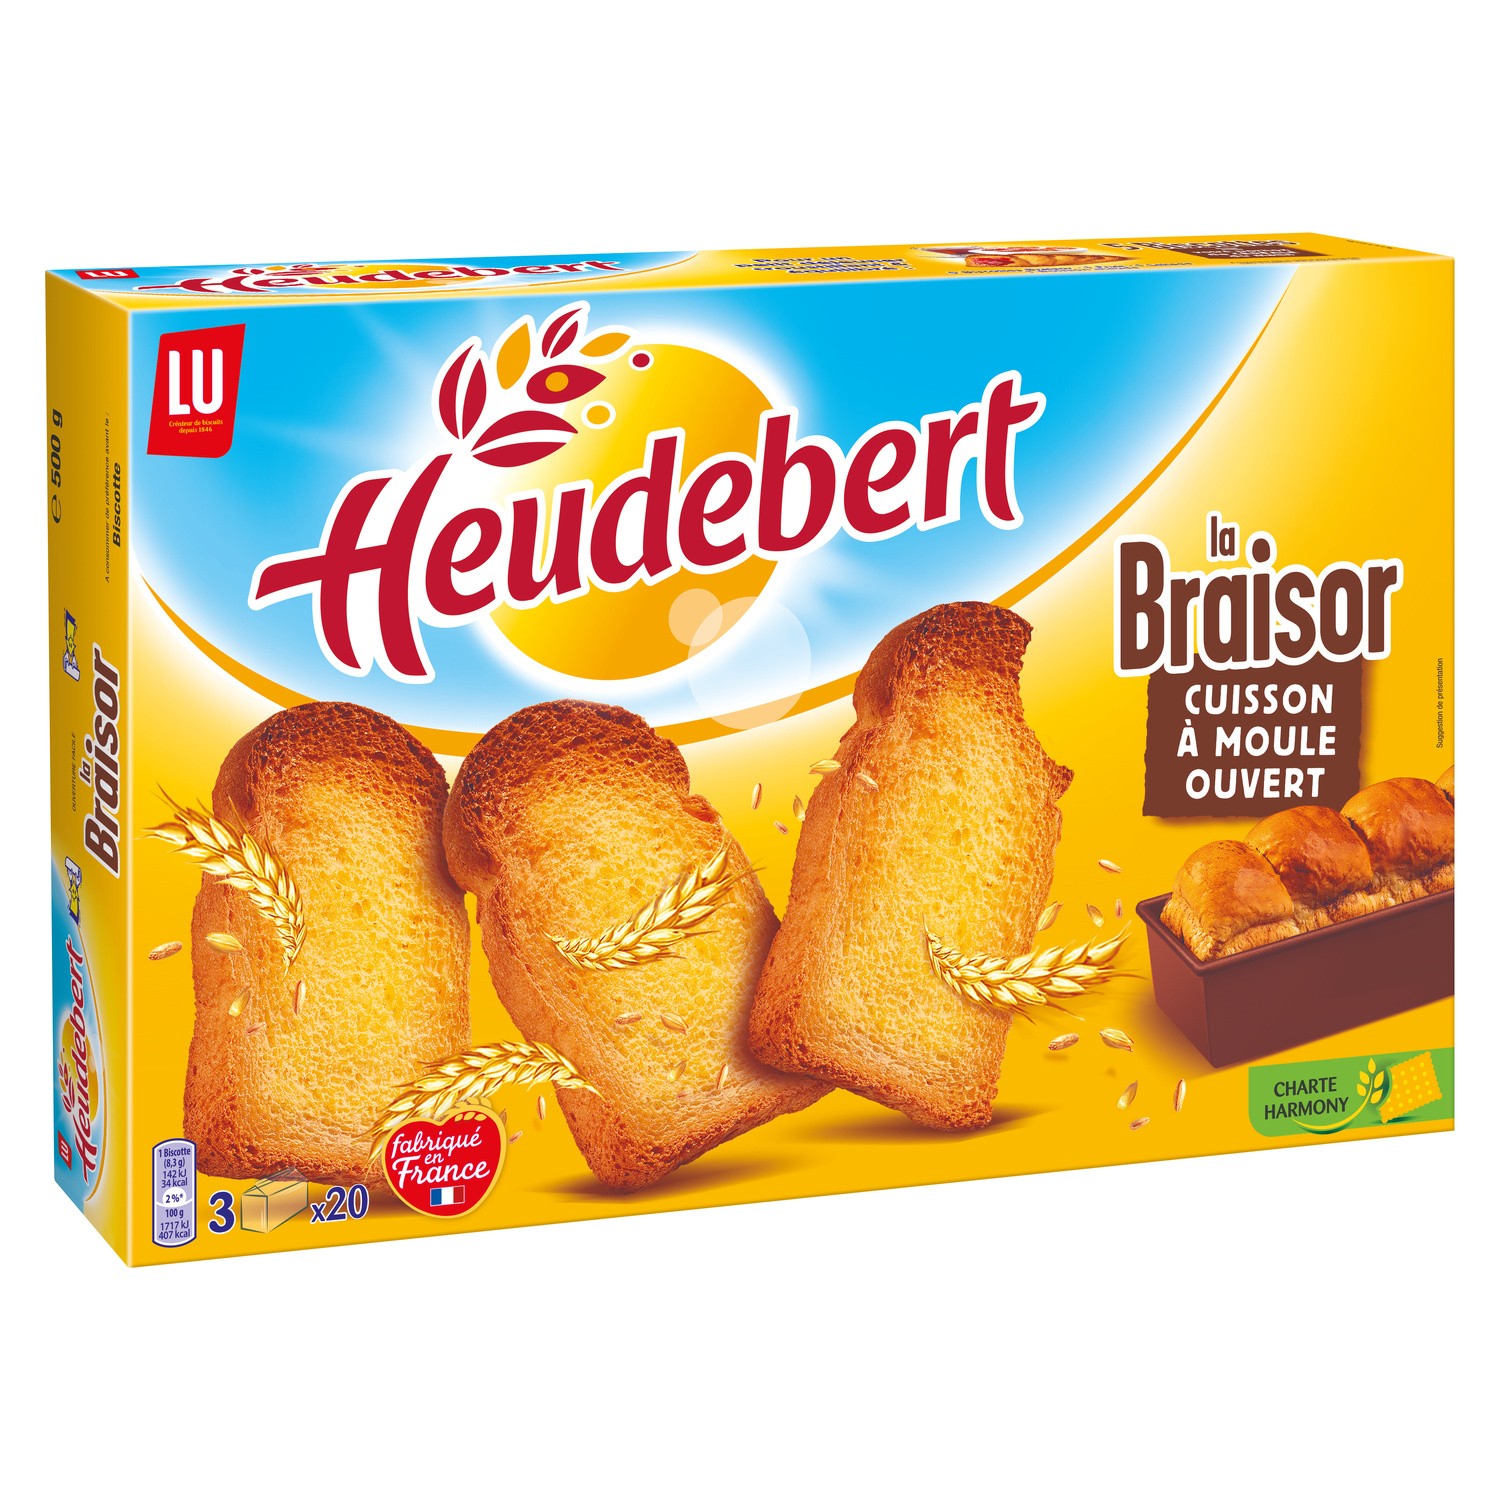 Heudebert Biscottes - 300 g